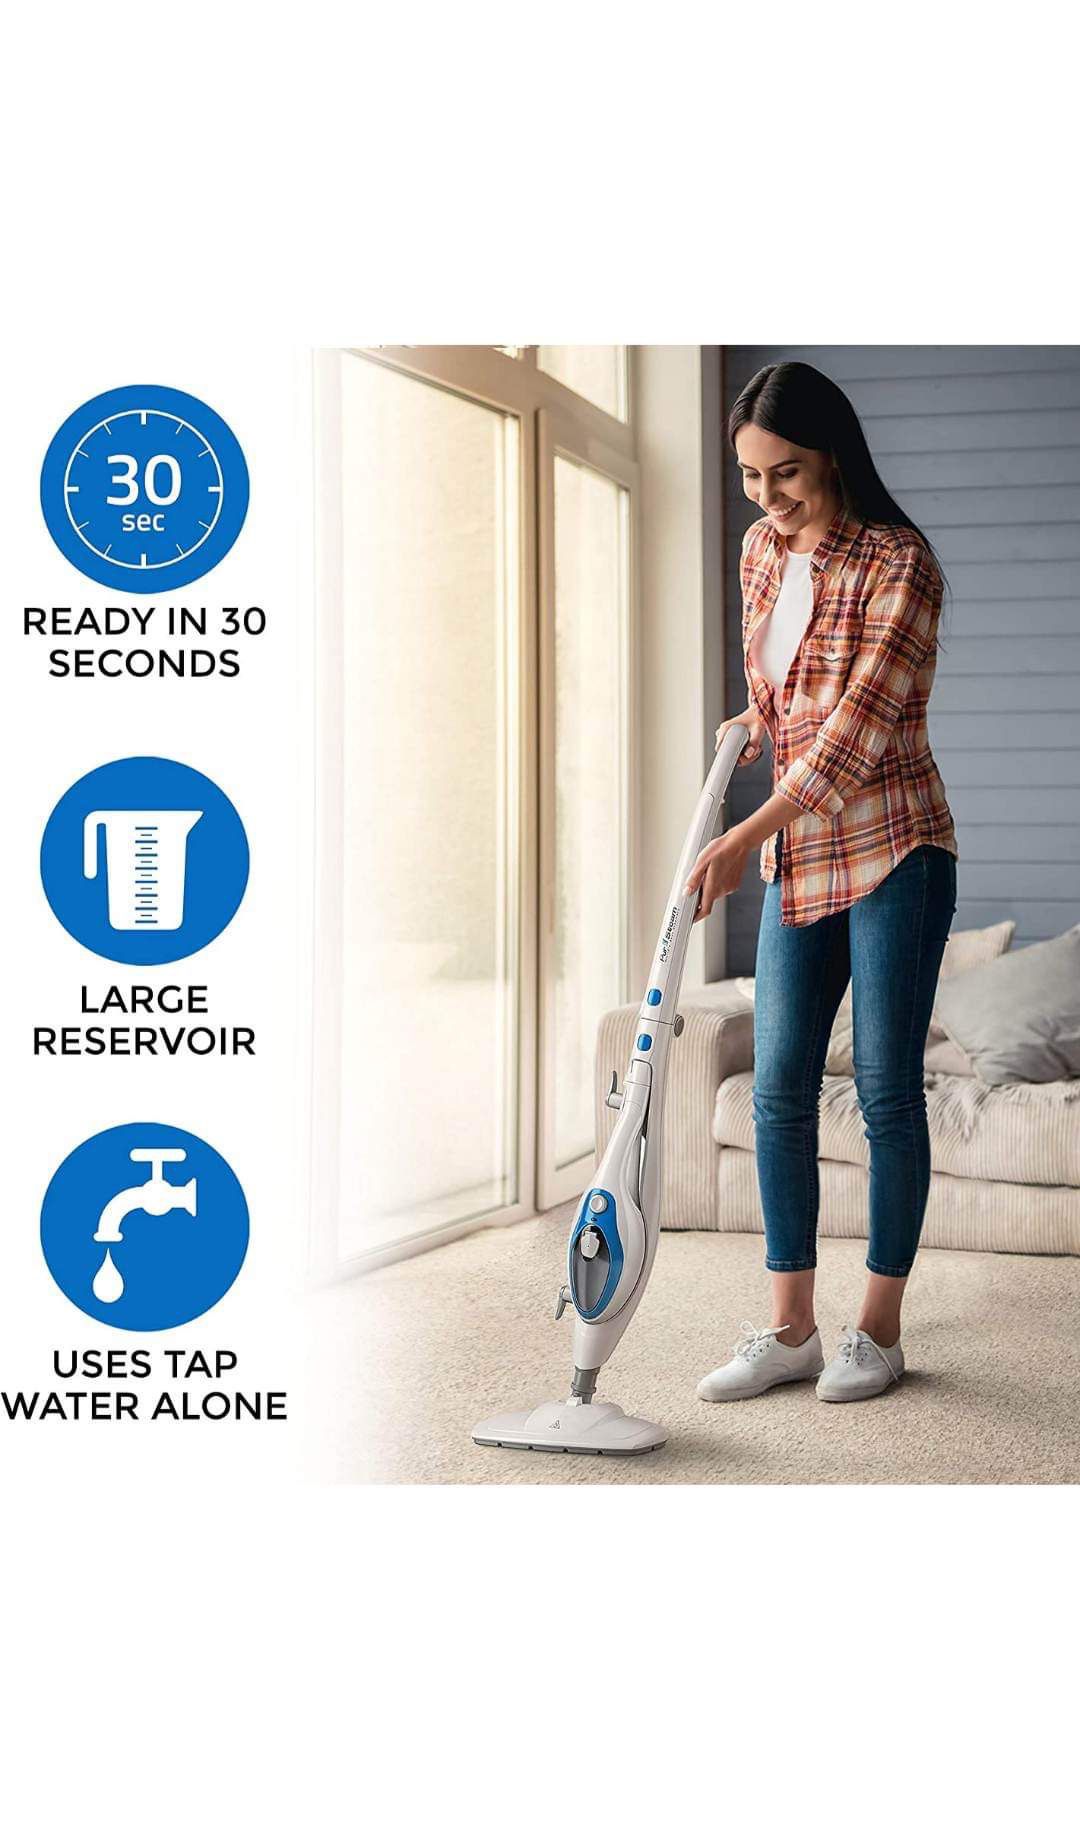 PurSteam Steam Mop Cleaner 10-in-1 with Convenient Detachable Handheld Unit, Laminate/Hardwood/Tiles/Carpet Kitchen - Garment - Clothes - Pet Friendly